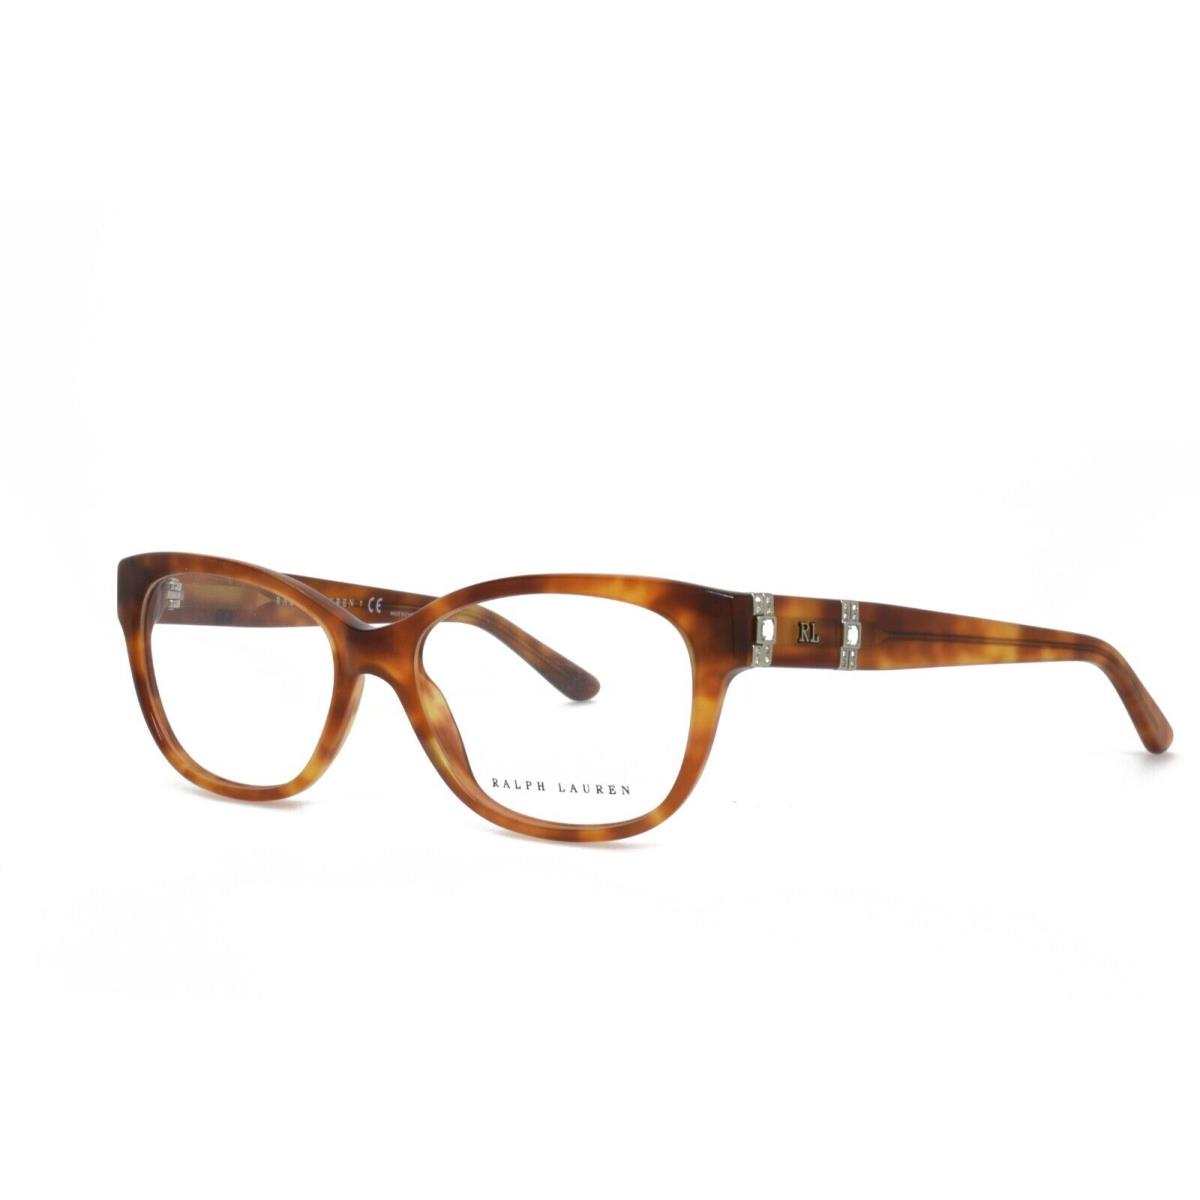 Ralph Lauren 6146B 5023 52-16-140 Brown Eyeglasses Frames